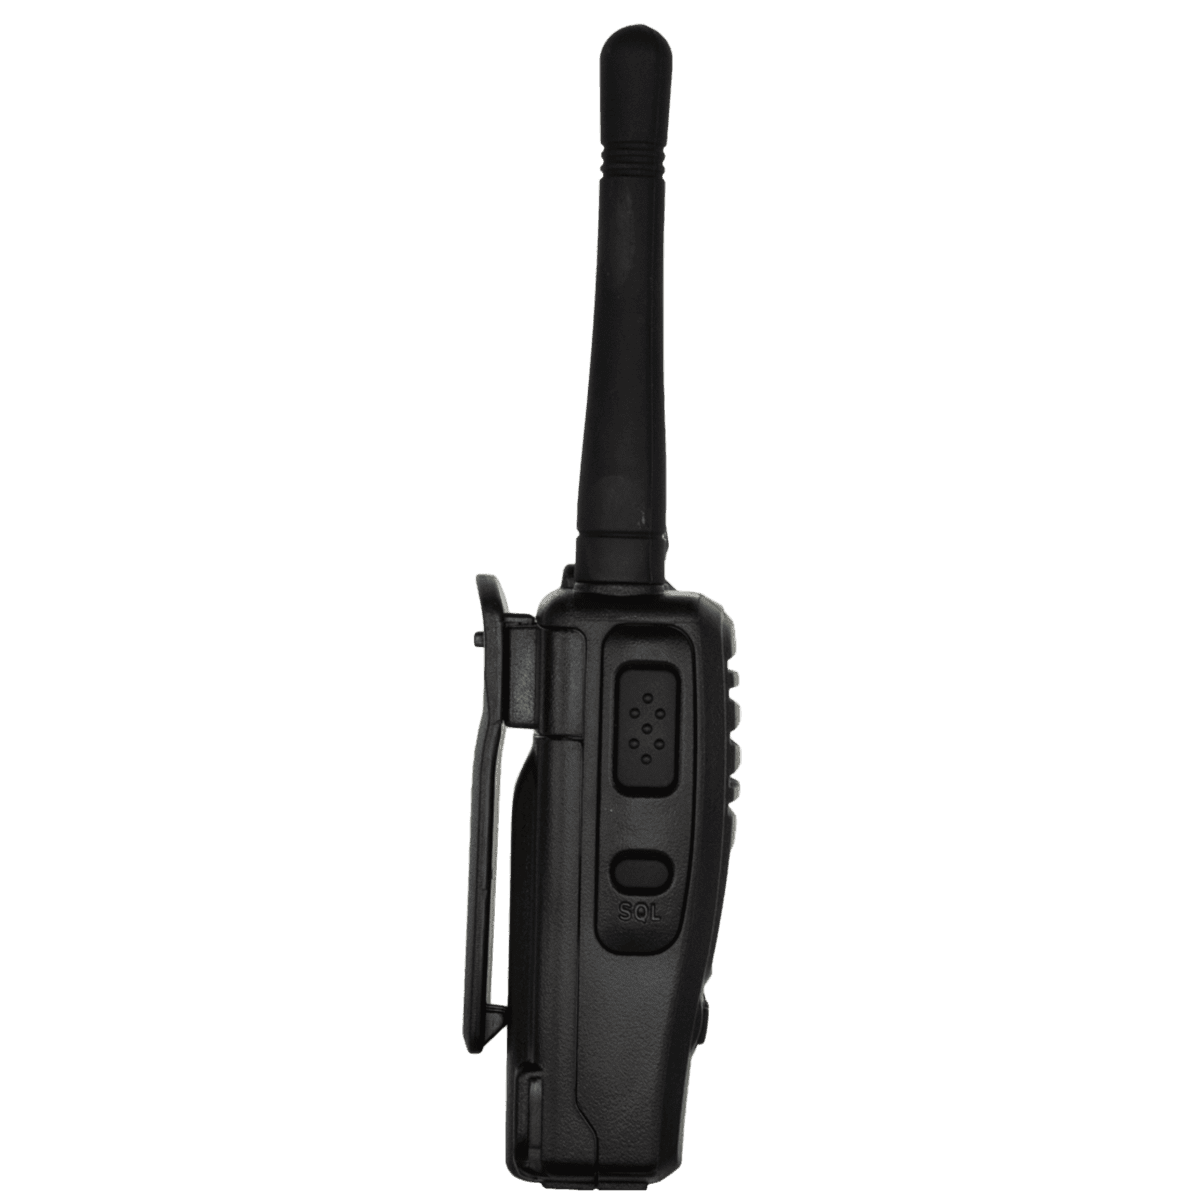 GME TX677TP 2 Watt UHF CB Handheld Radio - Twin Pack - NZ Offroader